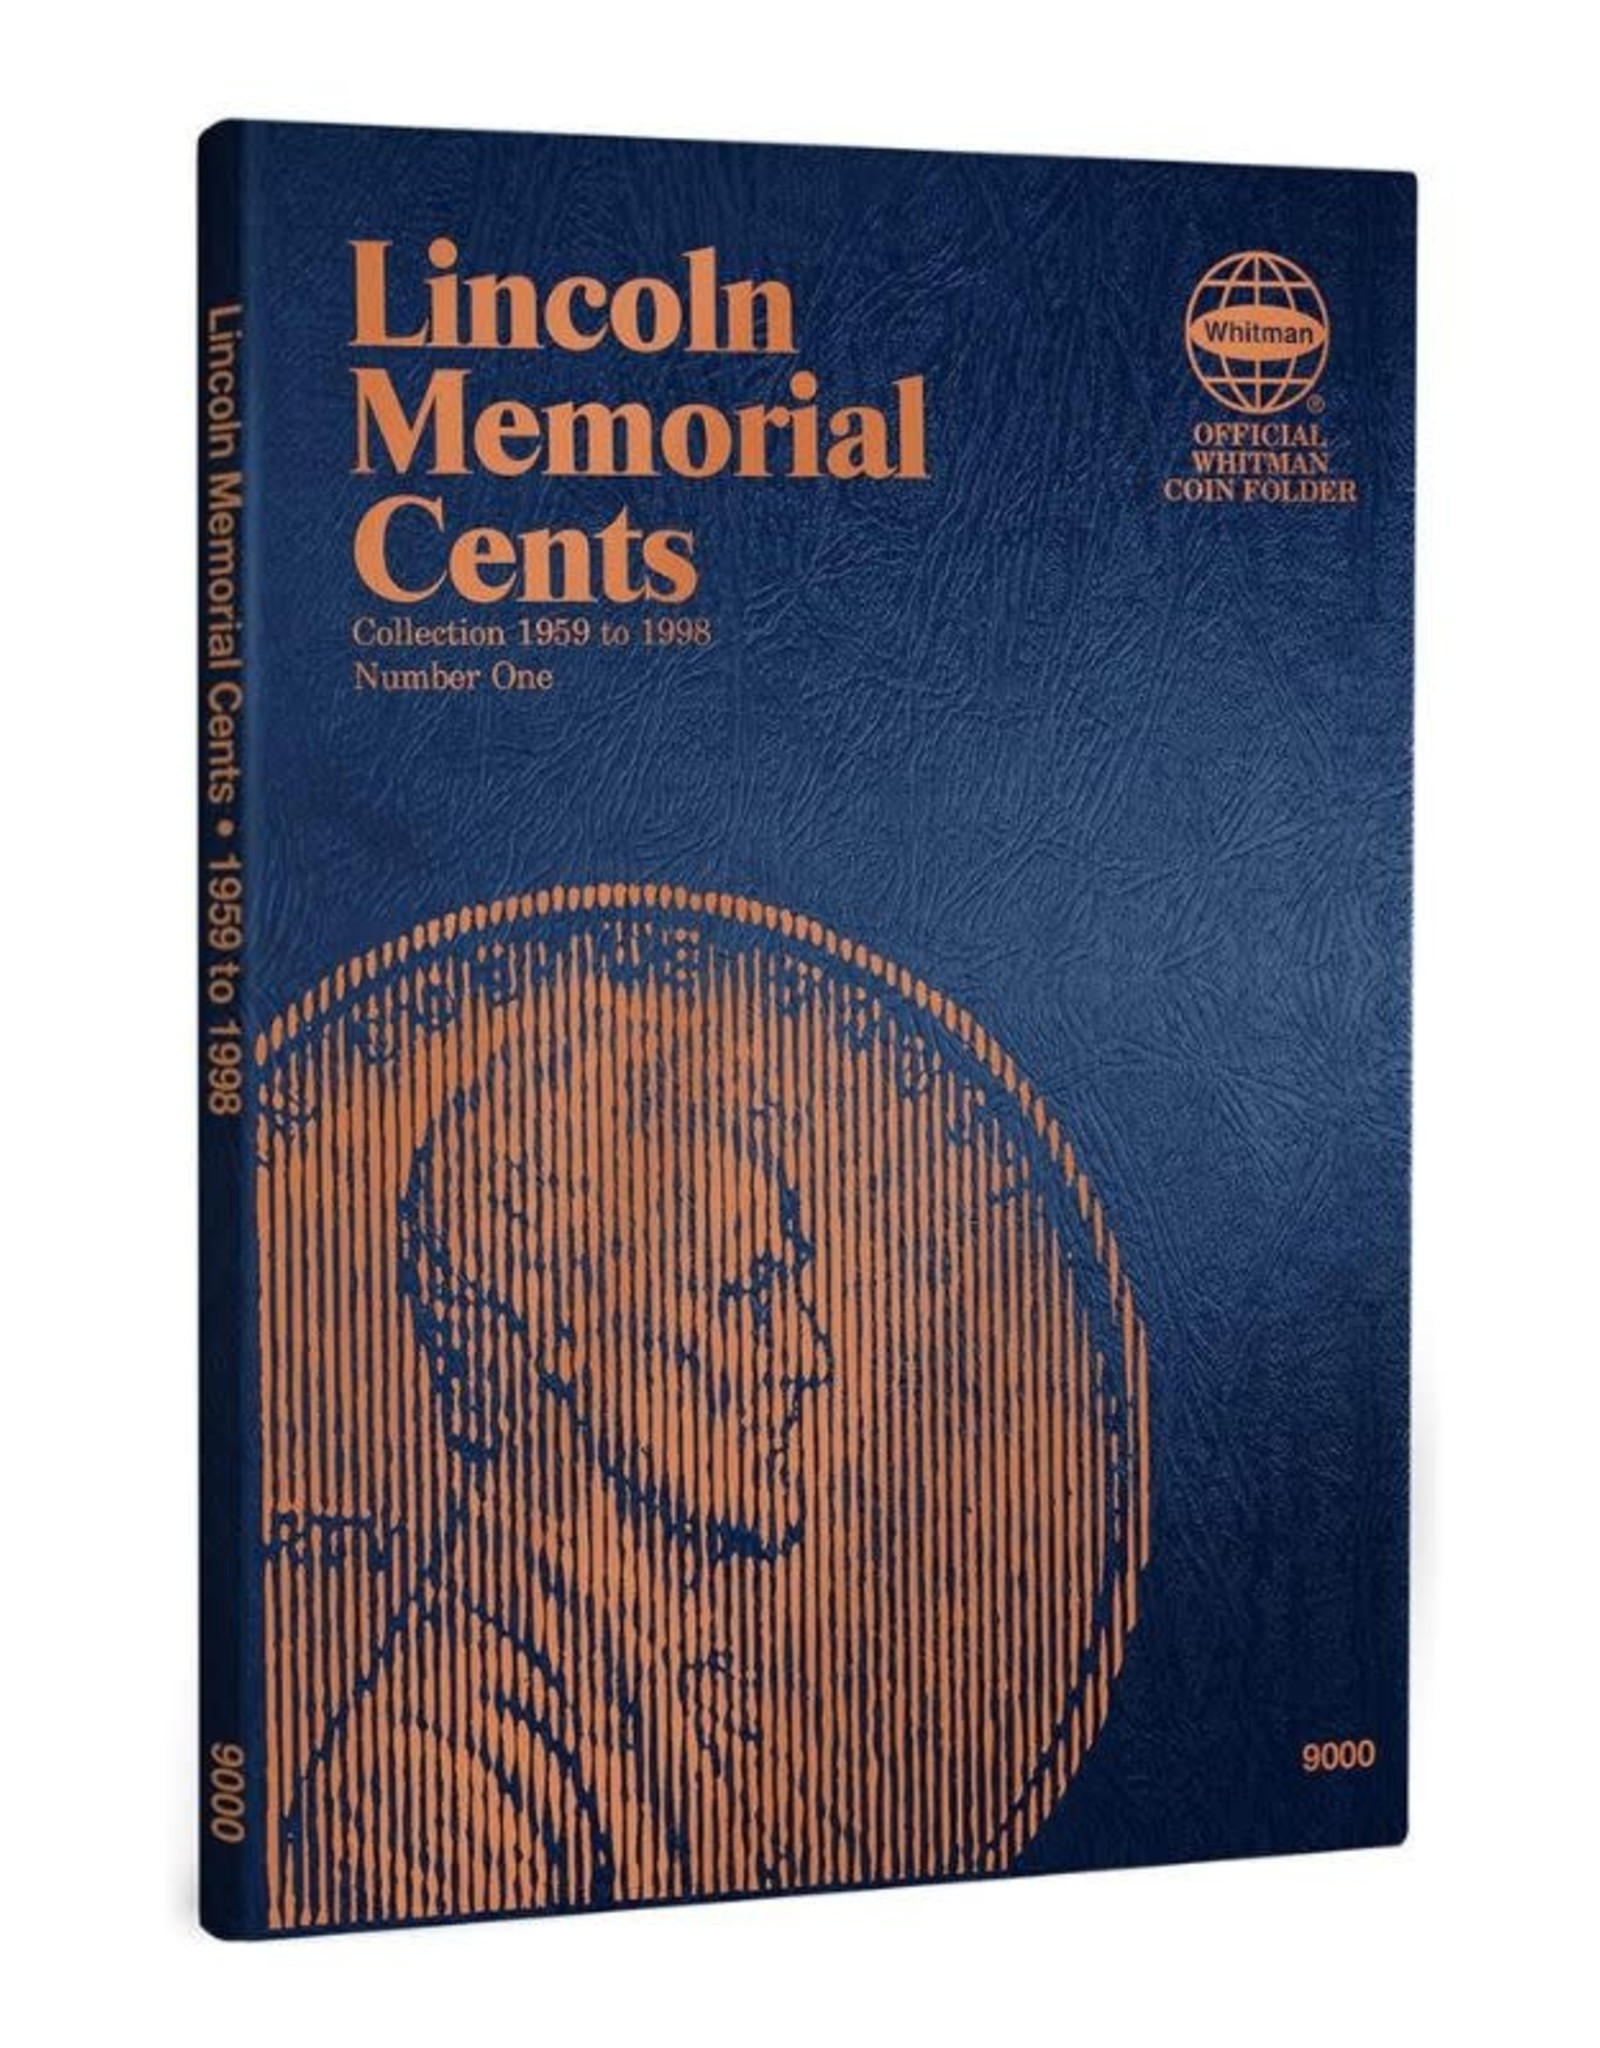 Lincoln Memorial Cents No. 1 (1959-1998)